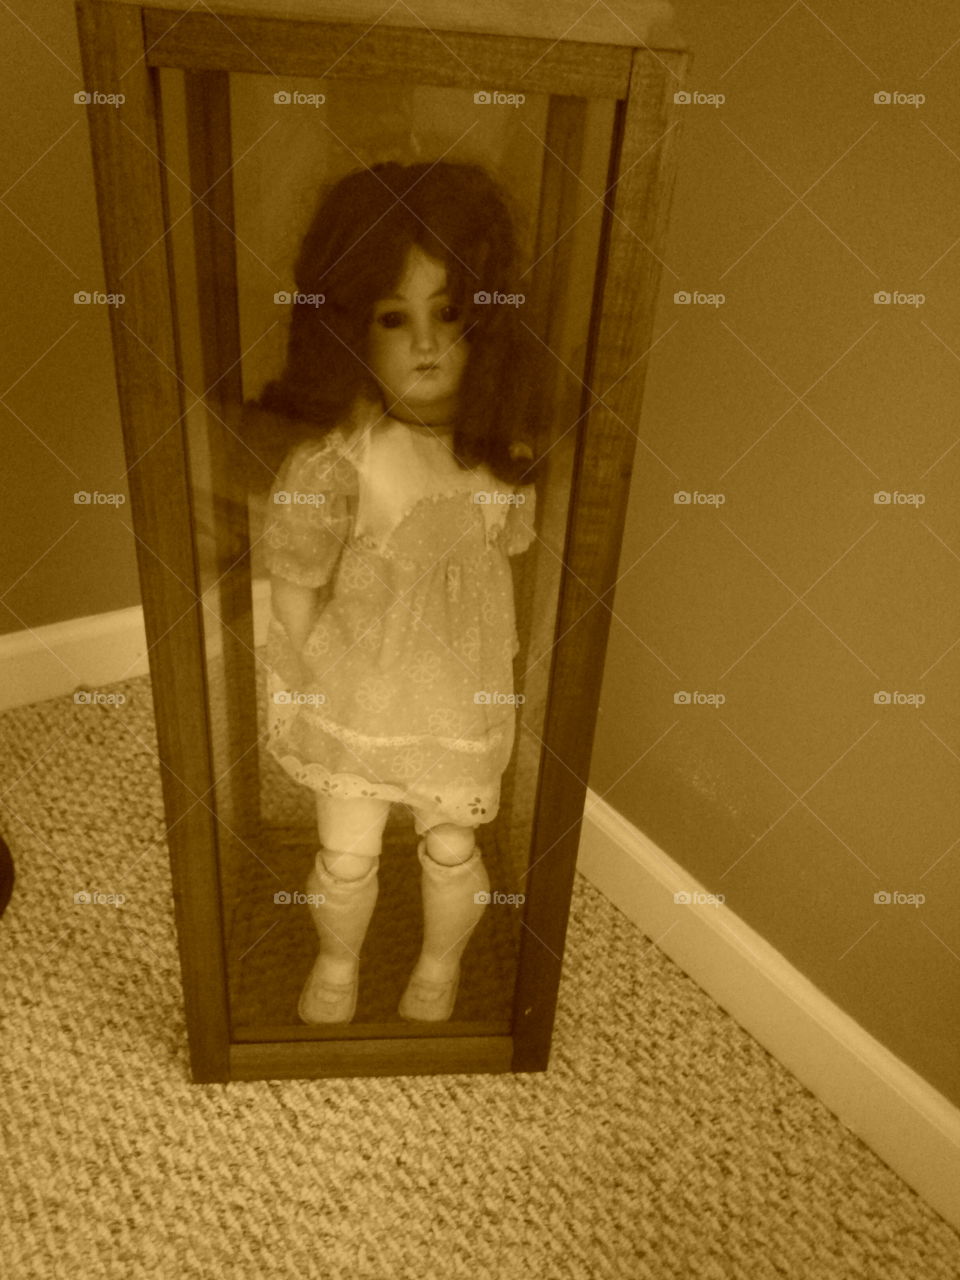 Creepy doll